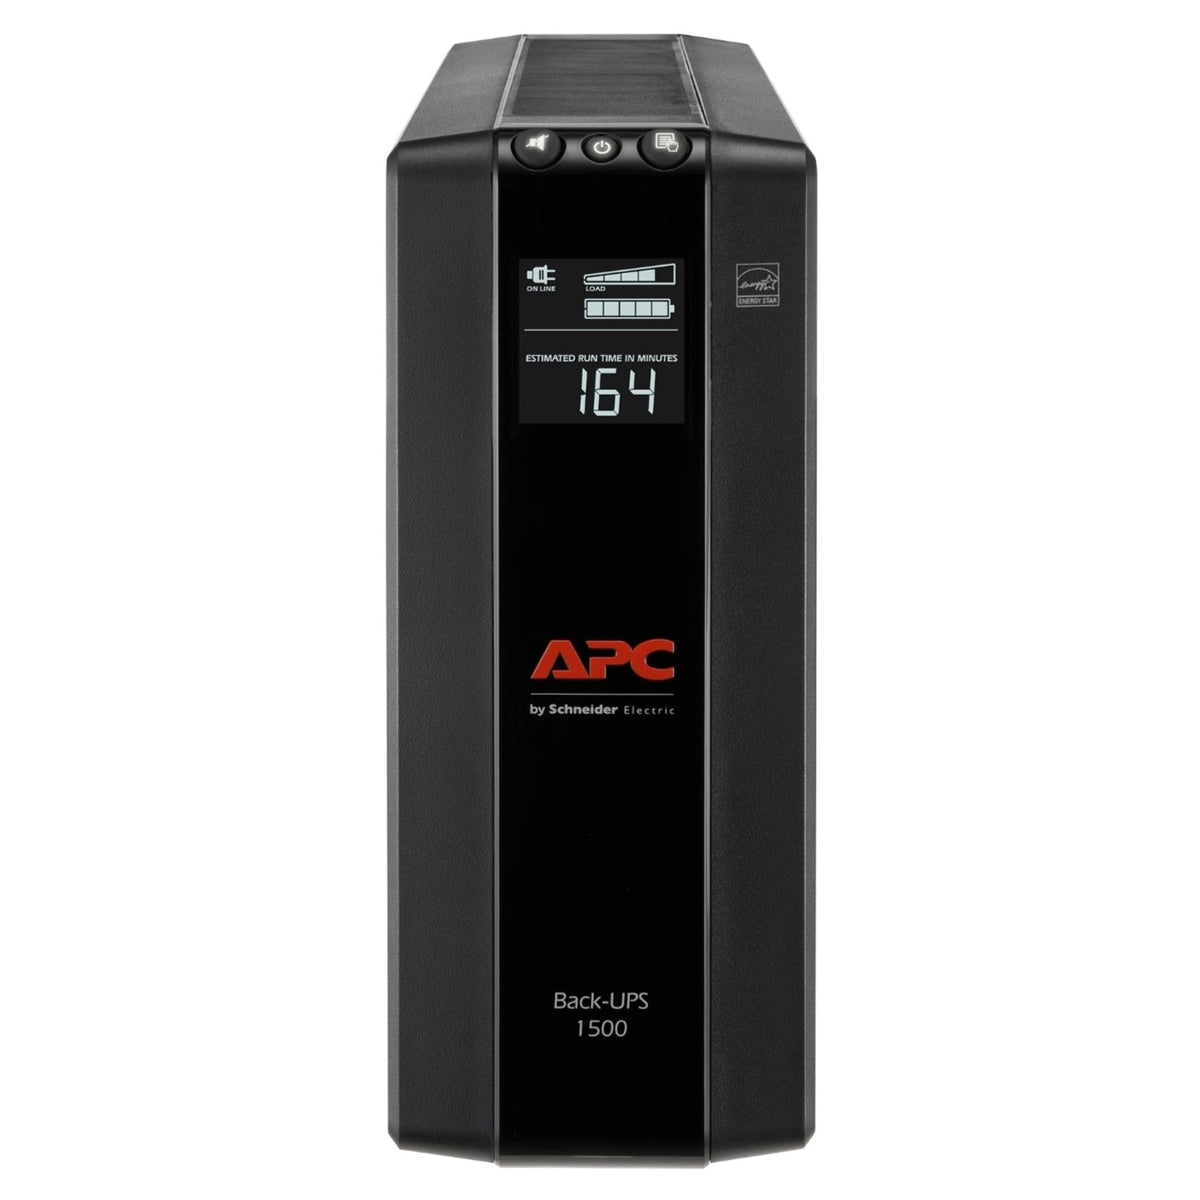 Batería de Respaldo APC BX1500M-LM60 | 120V | USB | 900W | 1500VA